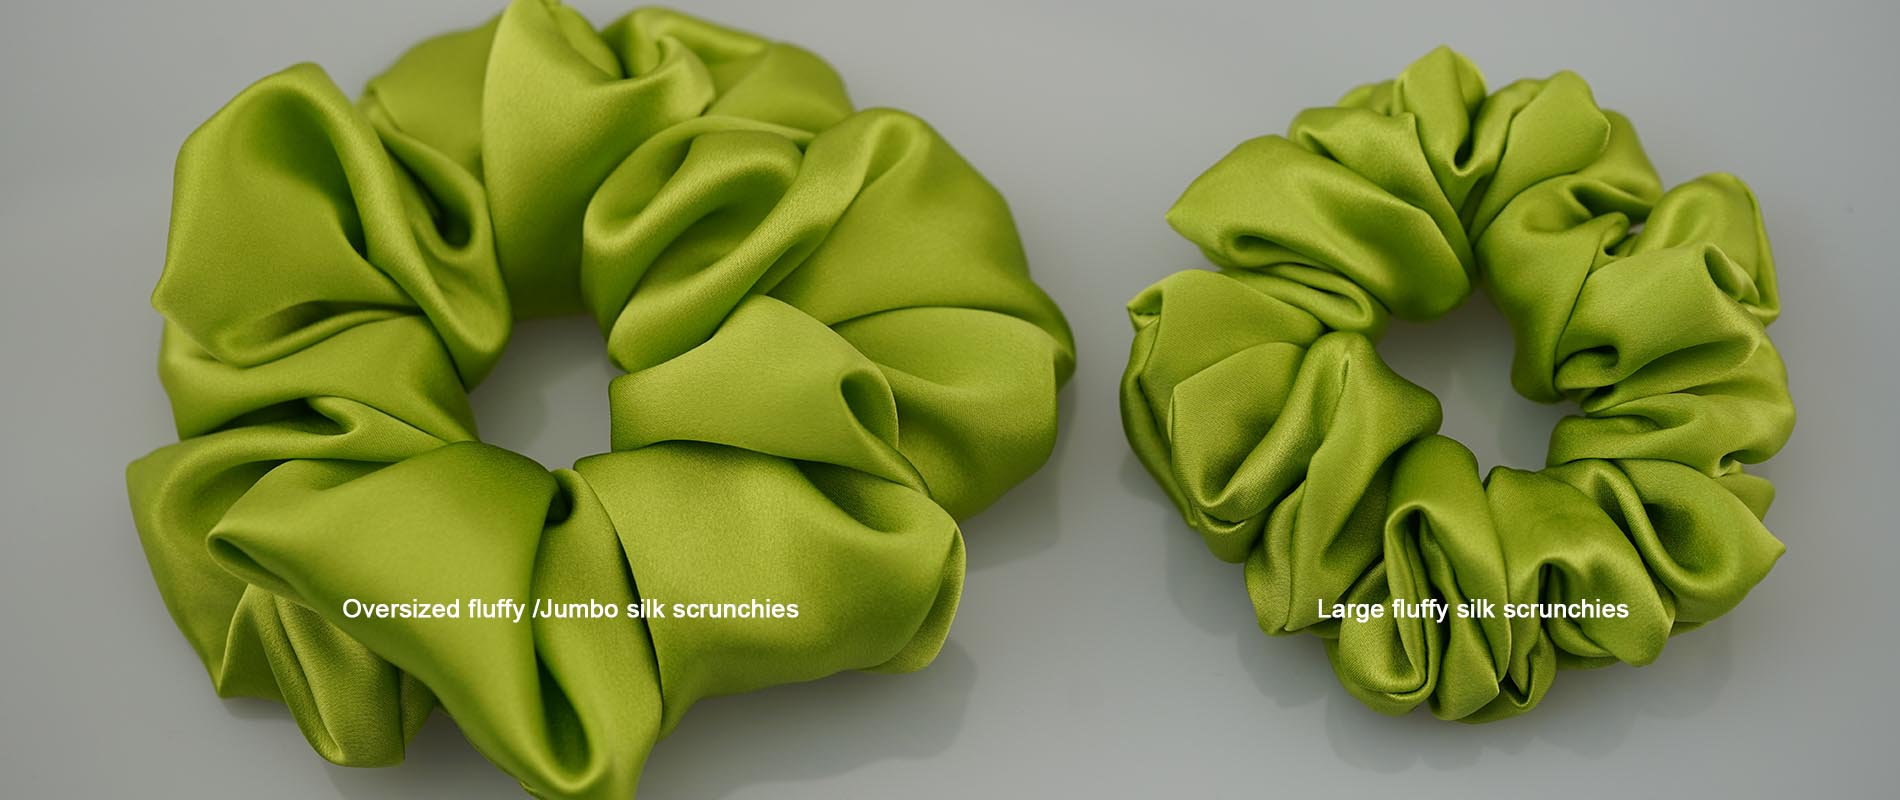 silk scrunchies wholesale